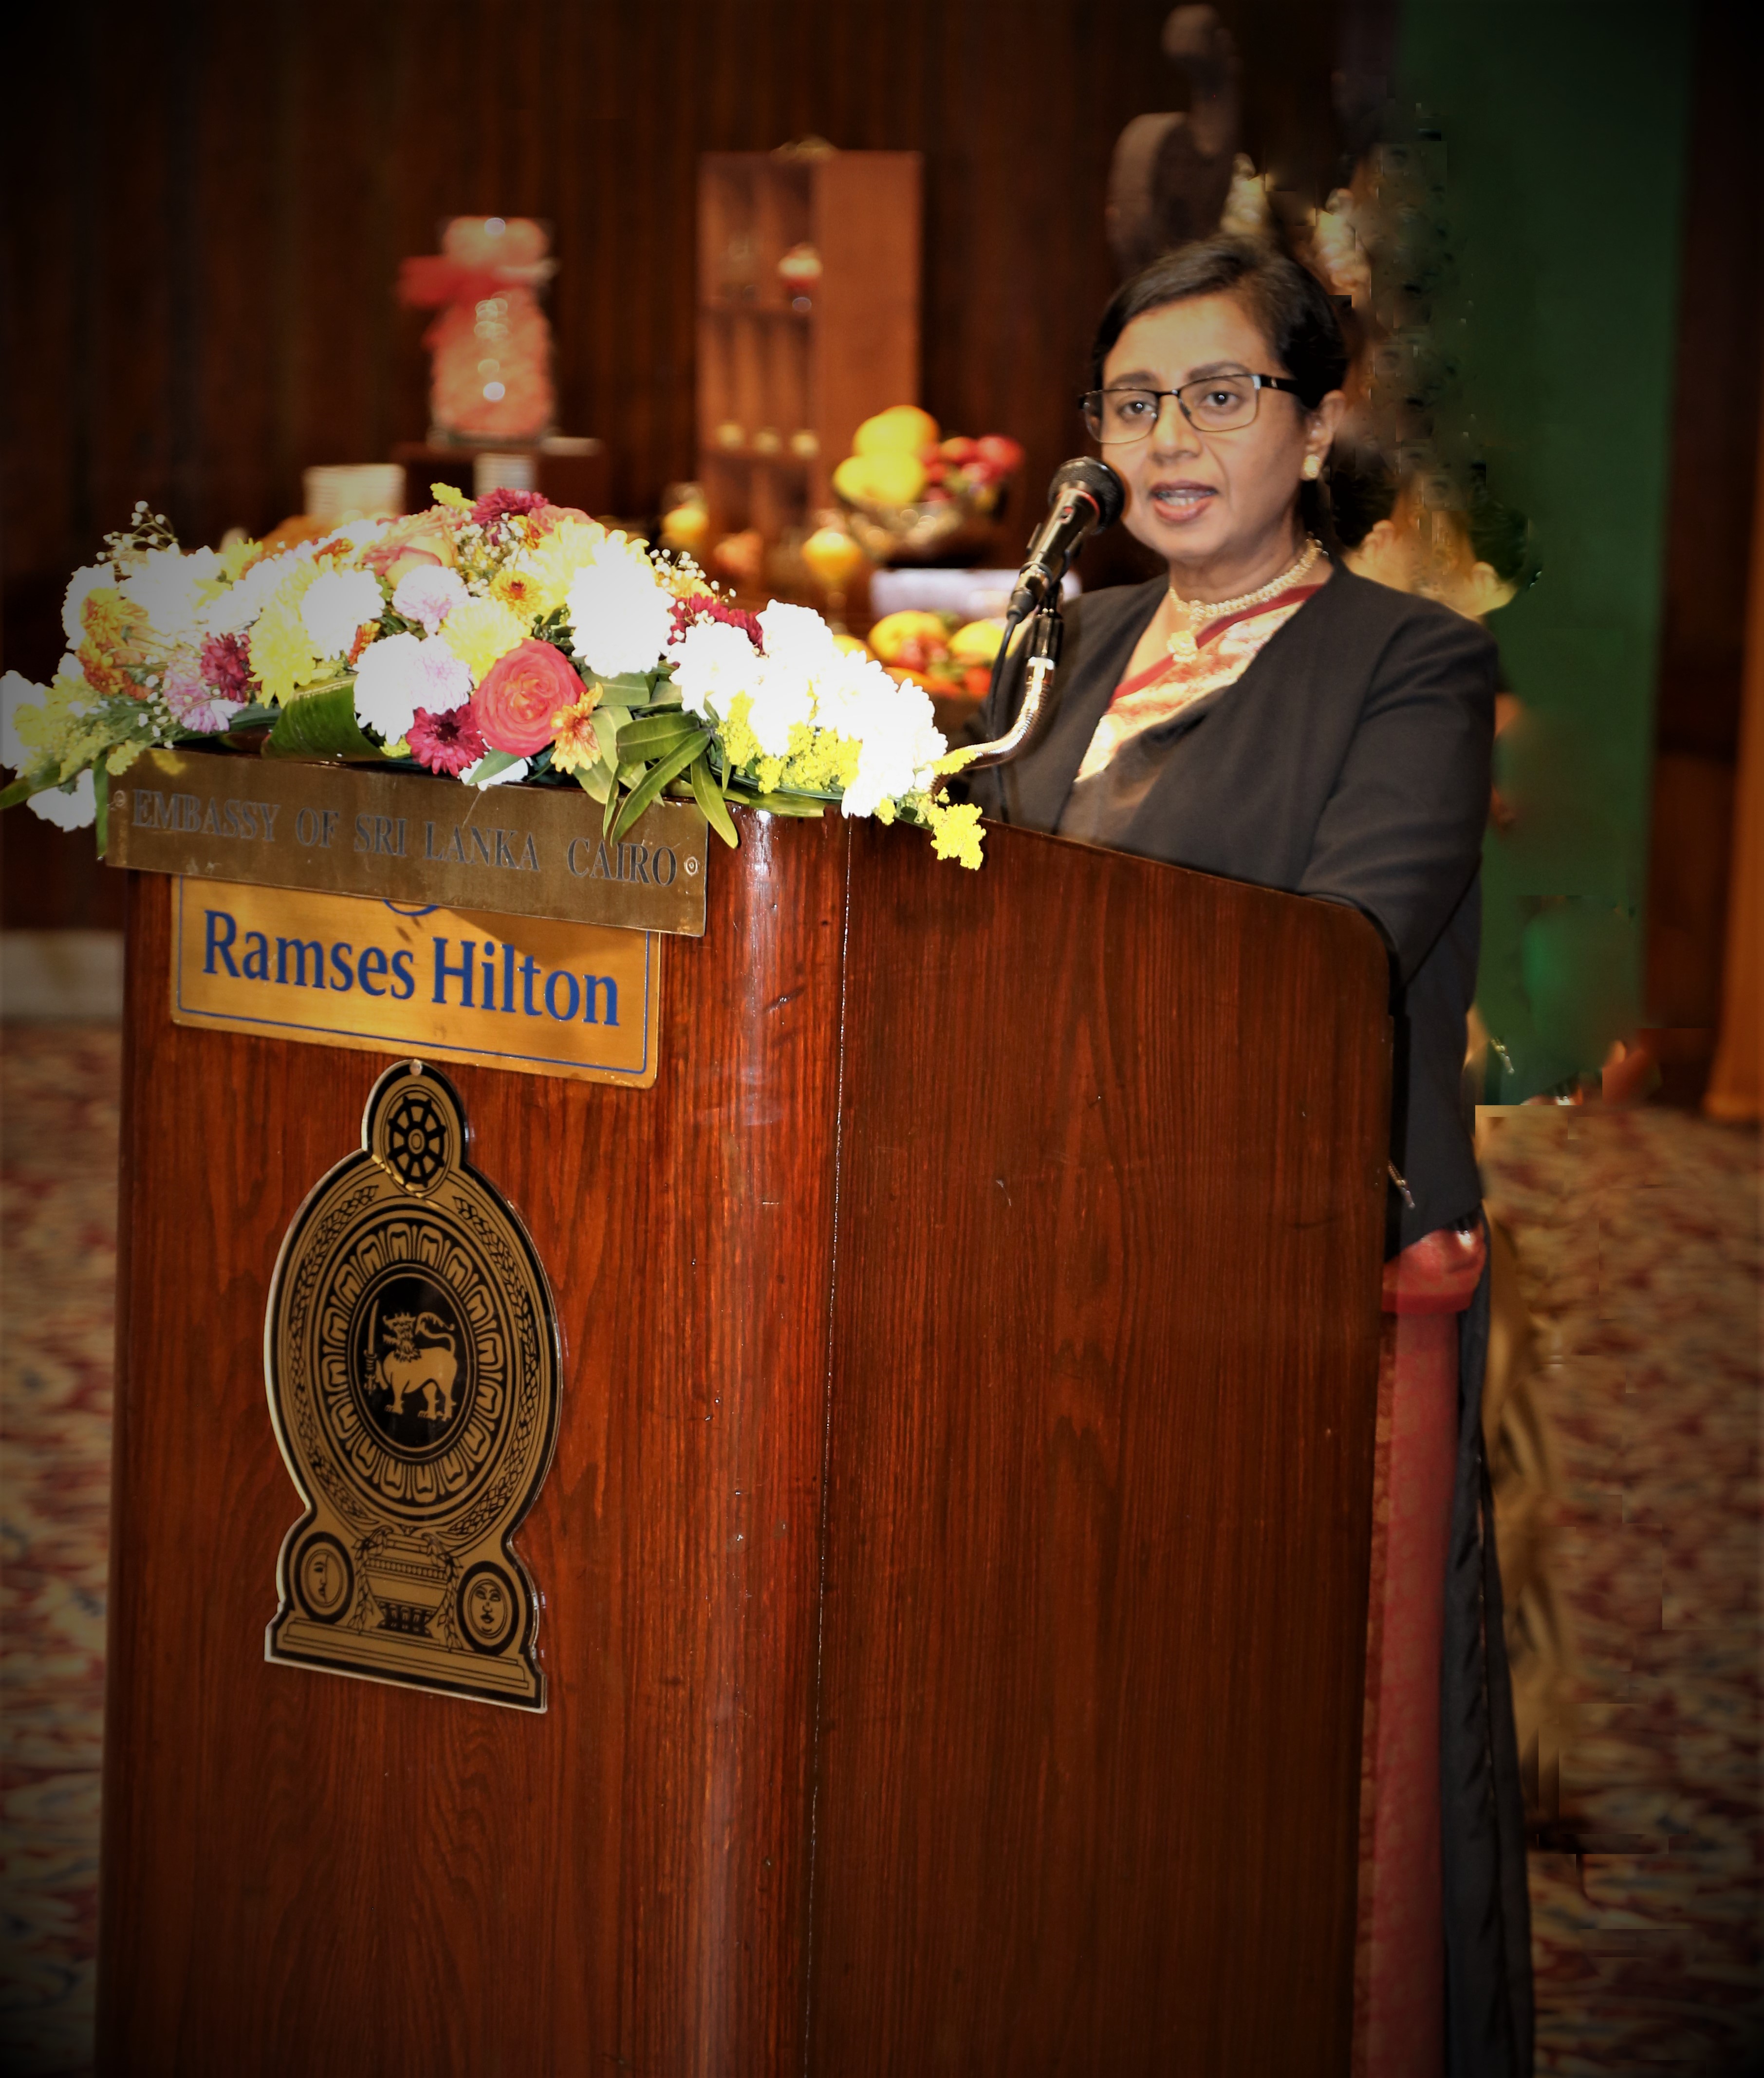 06_Feb. H. E. Addressing the Gathering at the Ramses Hilton Hotel